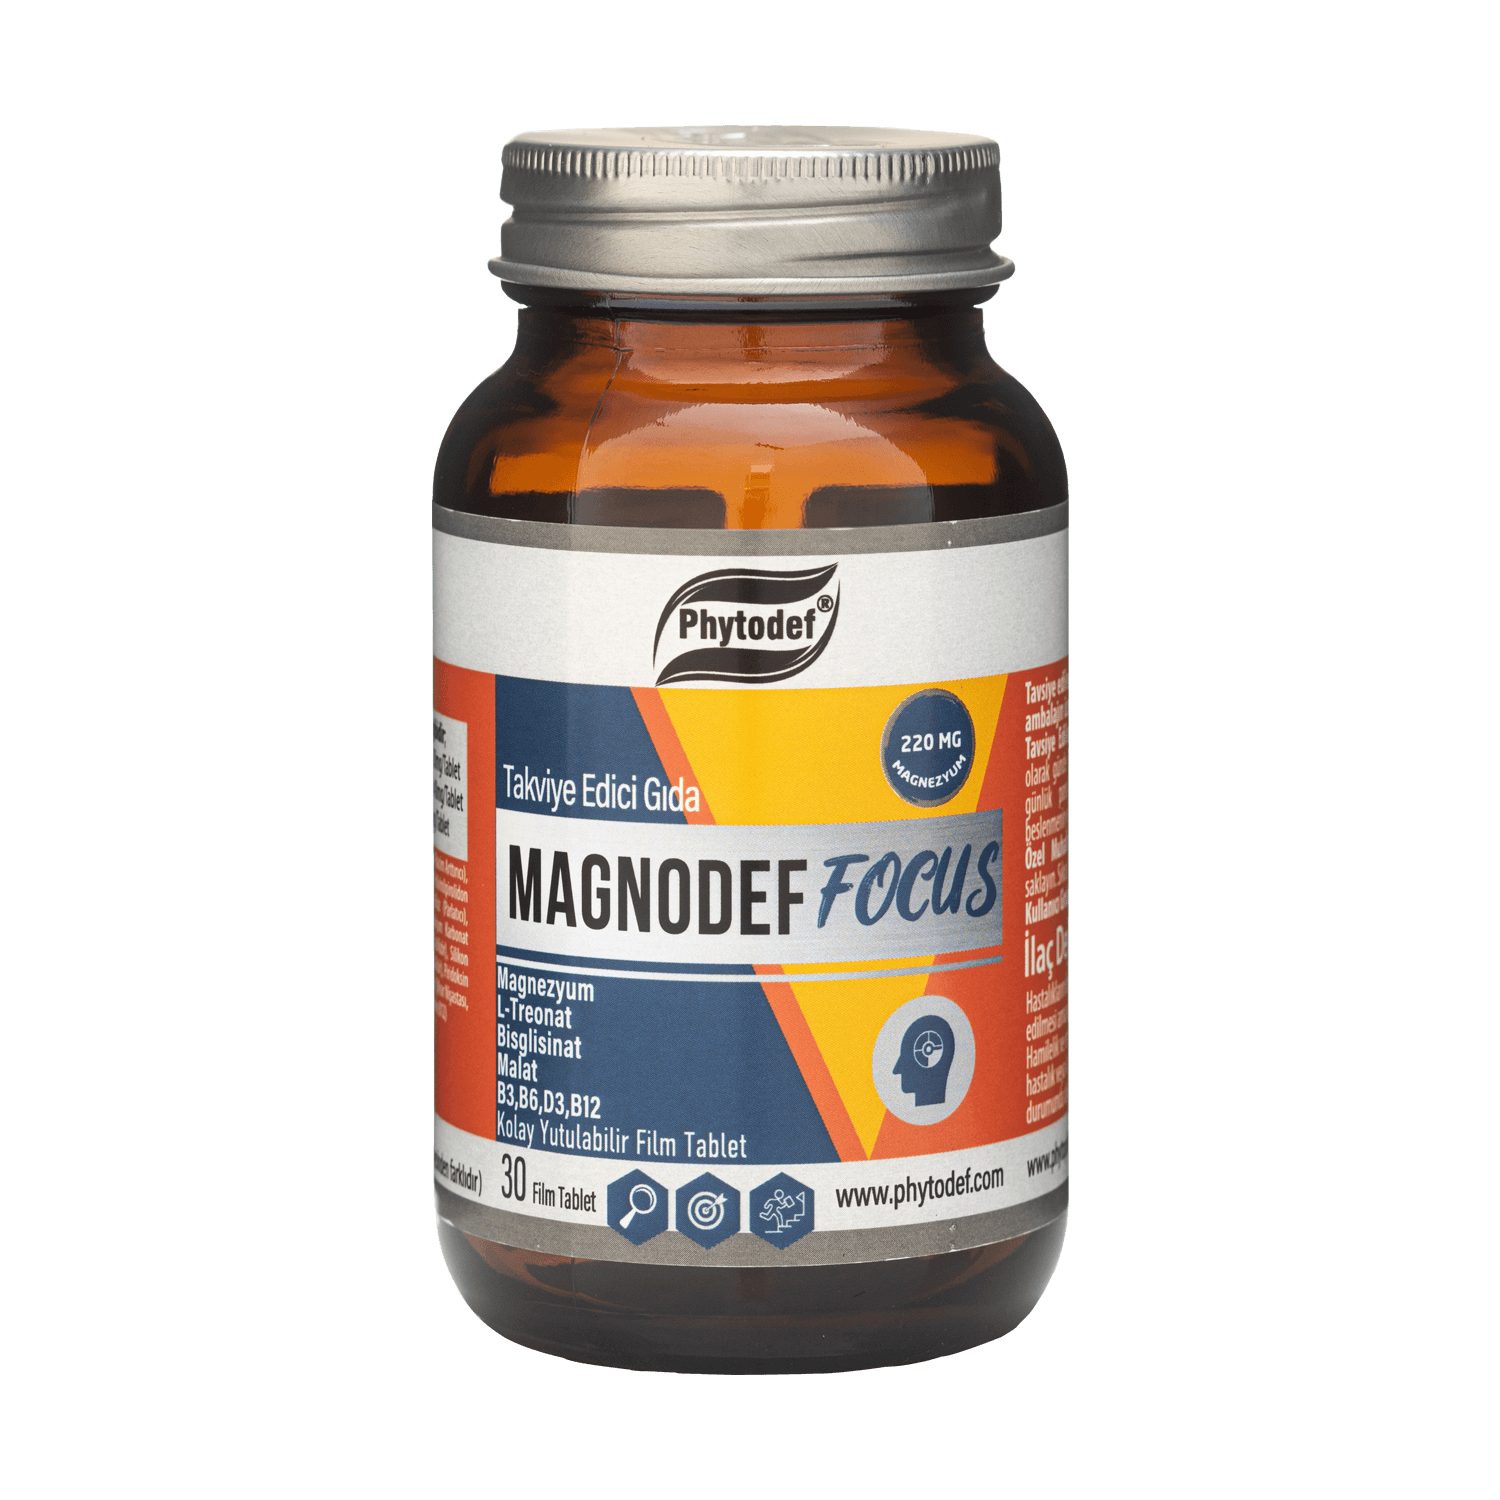 Magnodef Focus Magnezyum L-Treonat Bisglisinat Malat - 30 Film Tablet